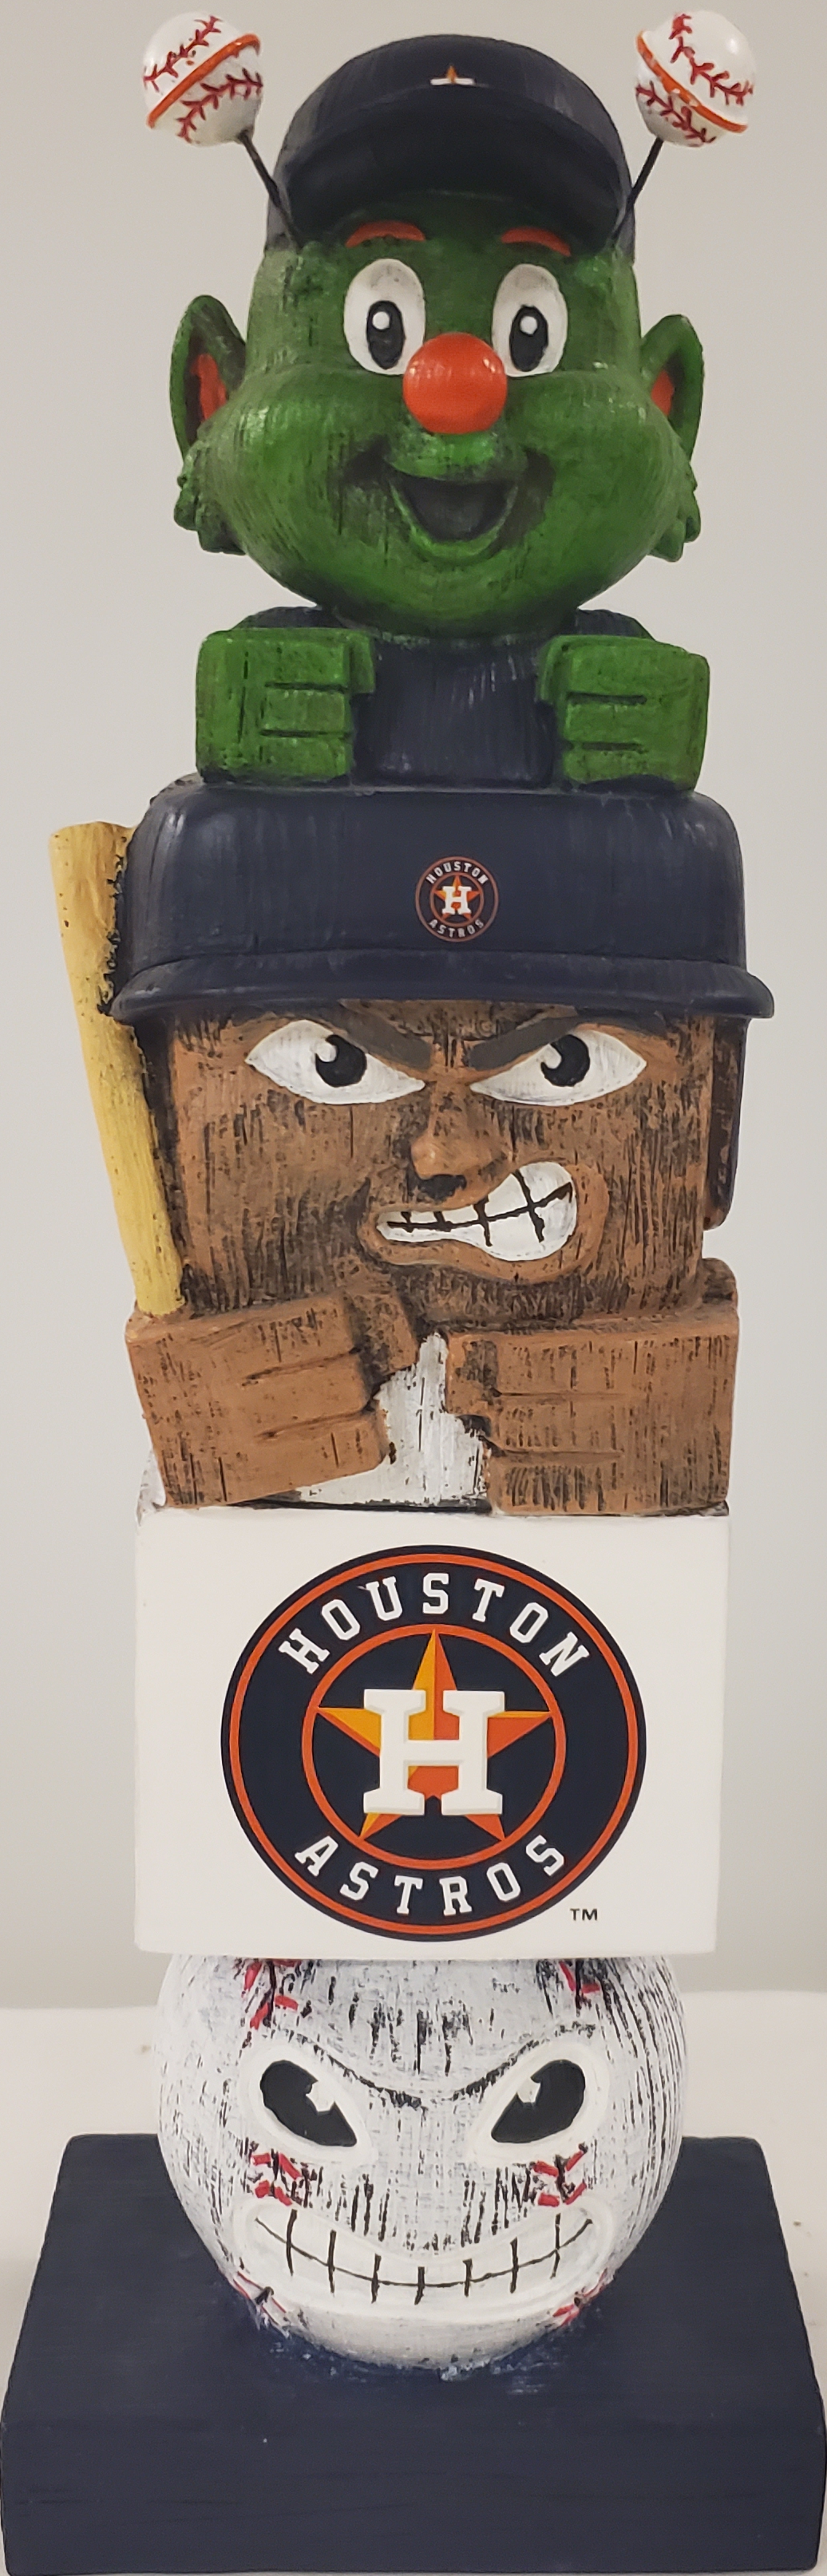 Houston Astros Totem